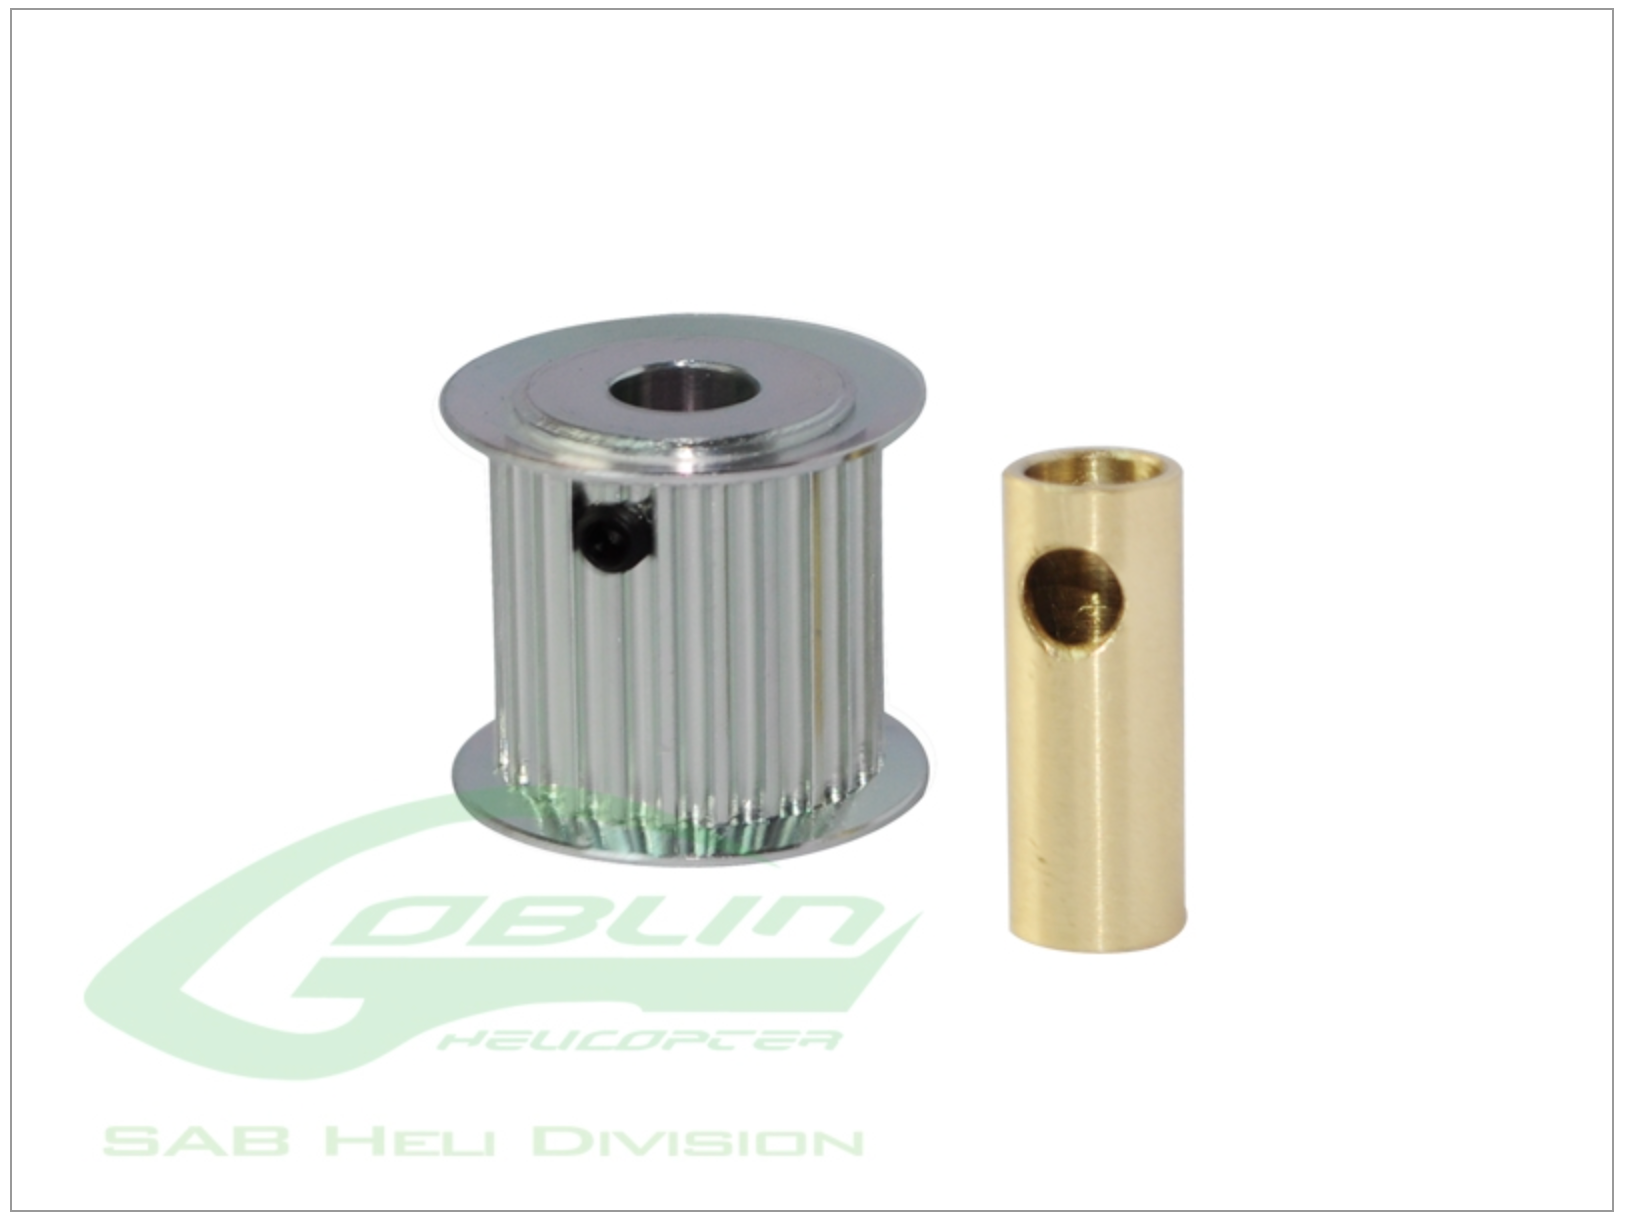 H0175-19-S Aluminum Motor Pulley 19T (for 6/8mm motor shaft)